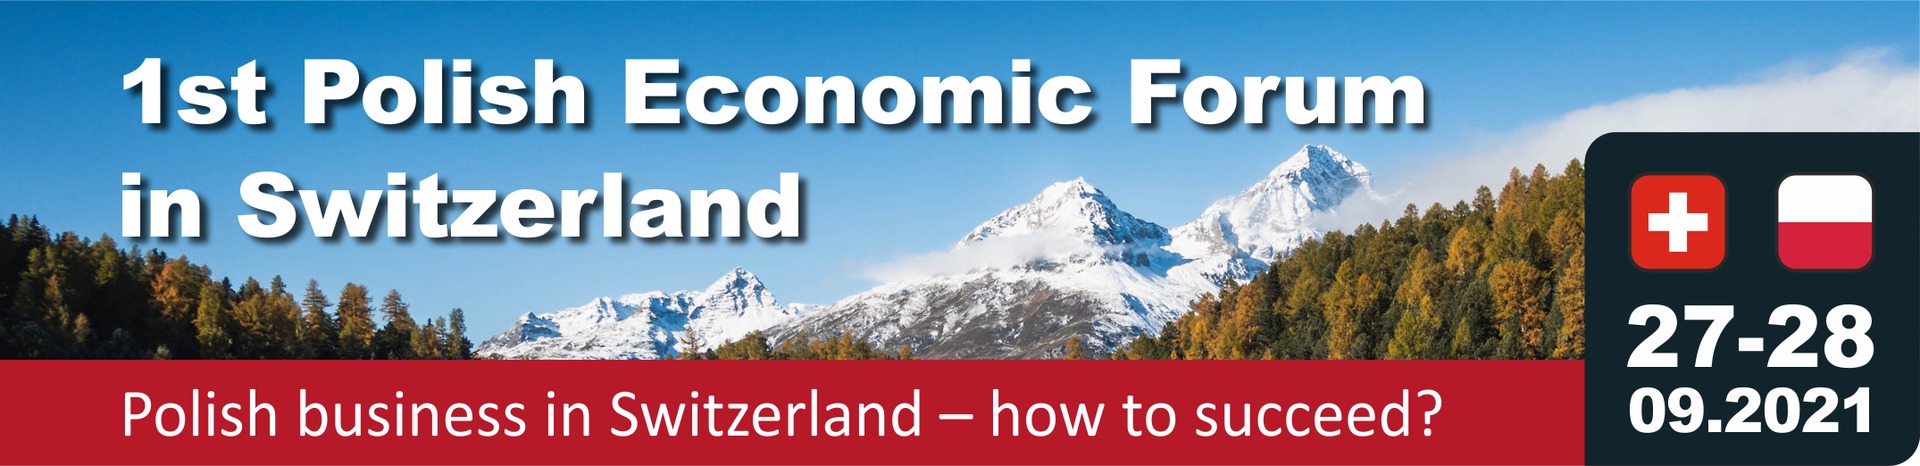 The 1st Polish Economic Forum in Switzerland “Polish entrepreneurs in Switzerland - how to succeed?”